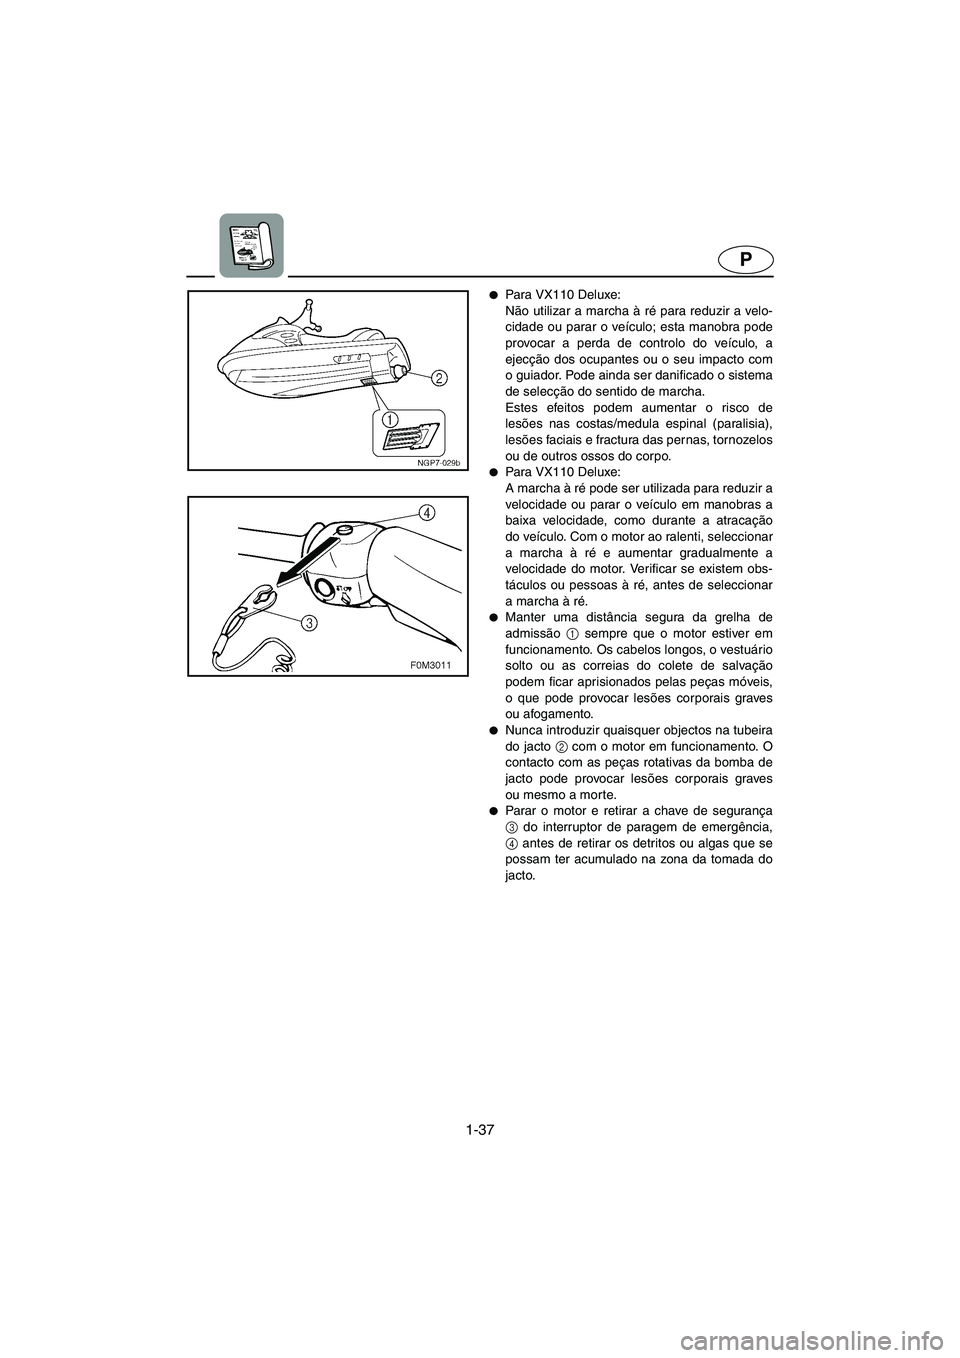 YAMAHA VX 2006  Manuale duso (in Italian) 1-37
P
Para VX110 Deluxe: 
Não utilizar a marcha à ré para reduzir a velo-
cidade ou parar o veículo; esta manobra pode
provocar a perda de controlo do veículo, a
ejecção dos ocupantes ou o se